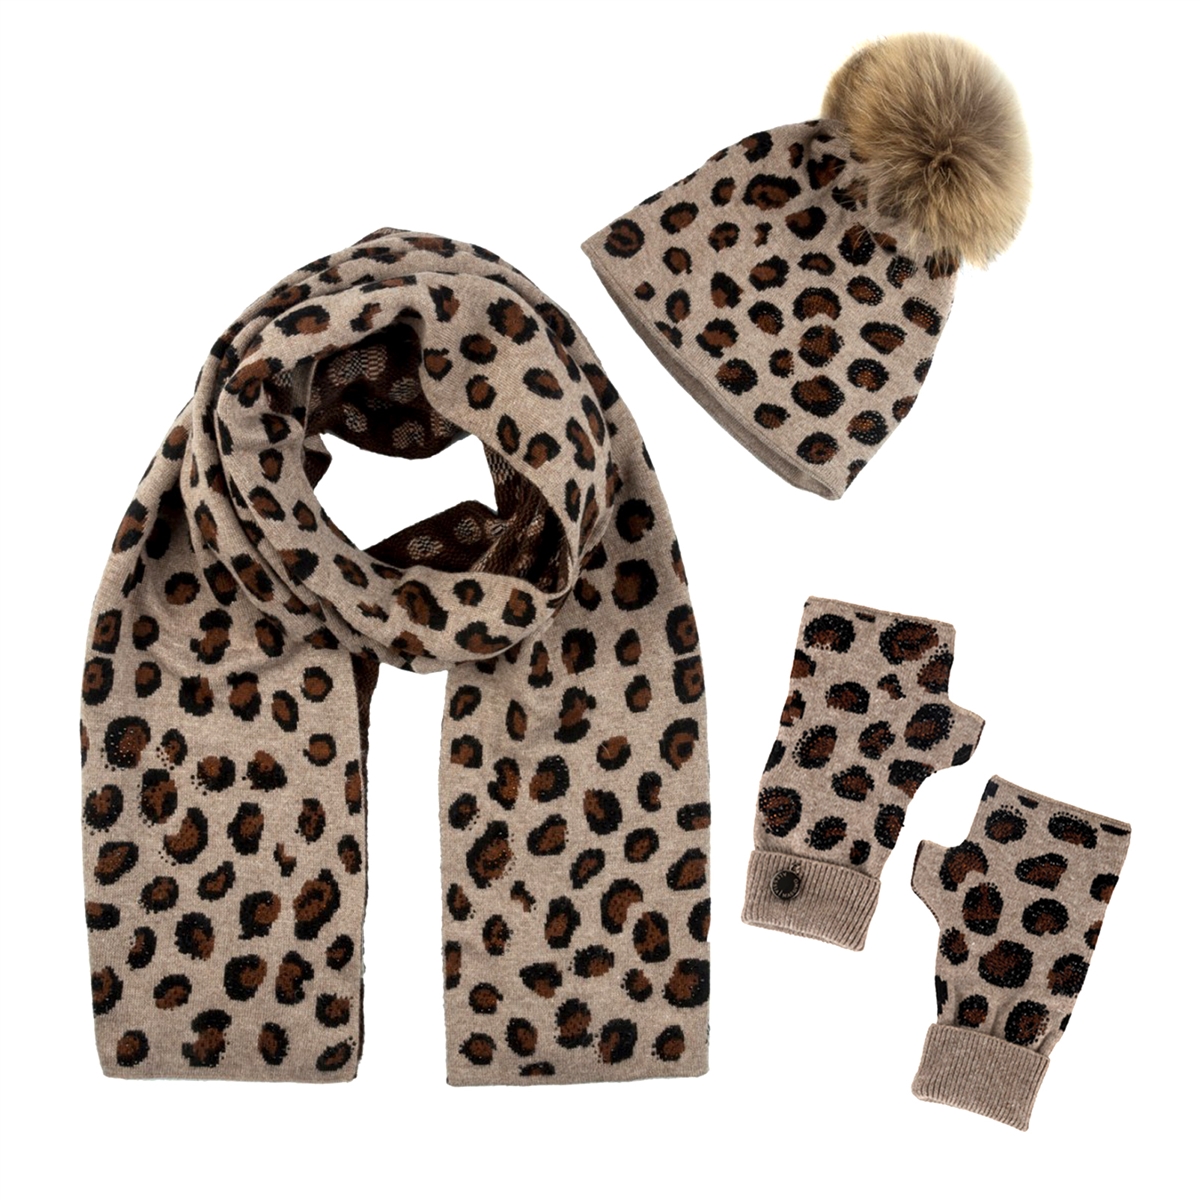 Alessia Massimo Women's Leopard Print Scarf, Fur Pom Pom Hat & Gloves Set, Maculato Brown